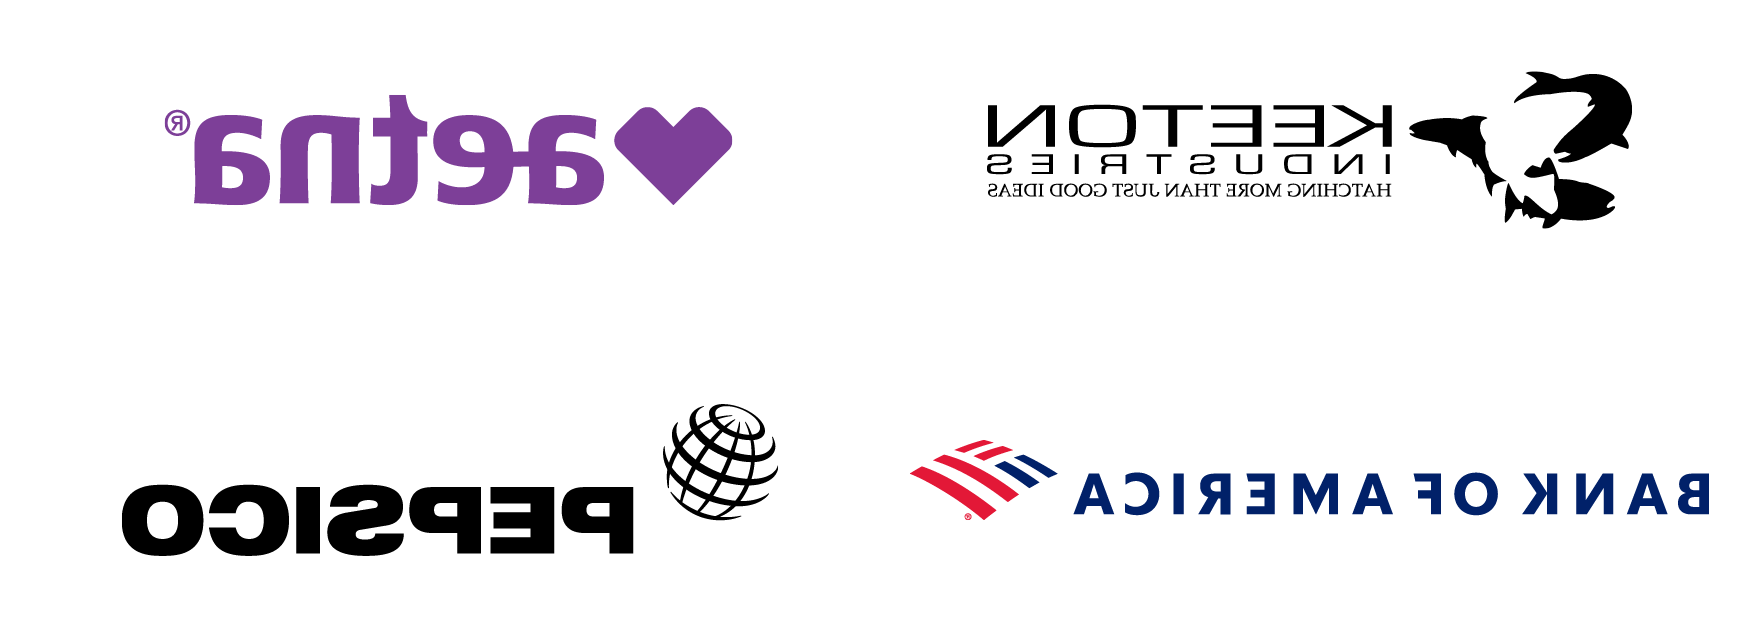 Logos of 信息系统 career destinations: Keeton Industries, 安泰, 美国银行, 和百事可乐